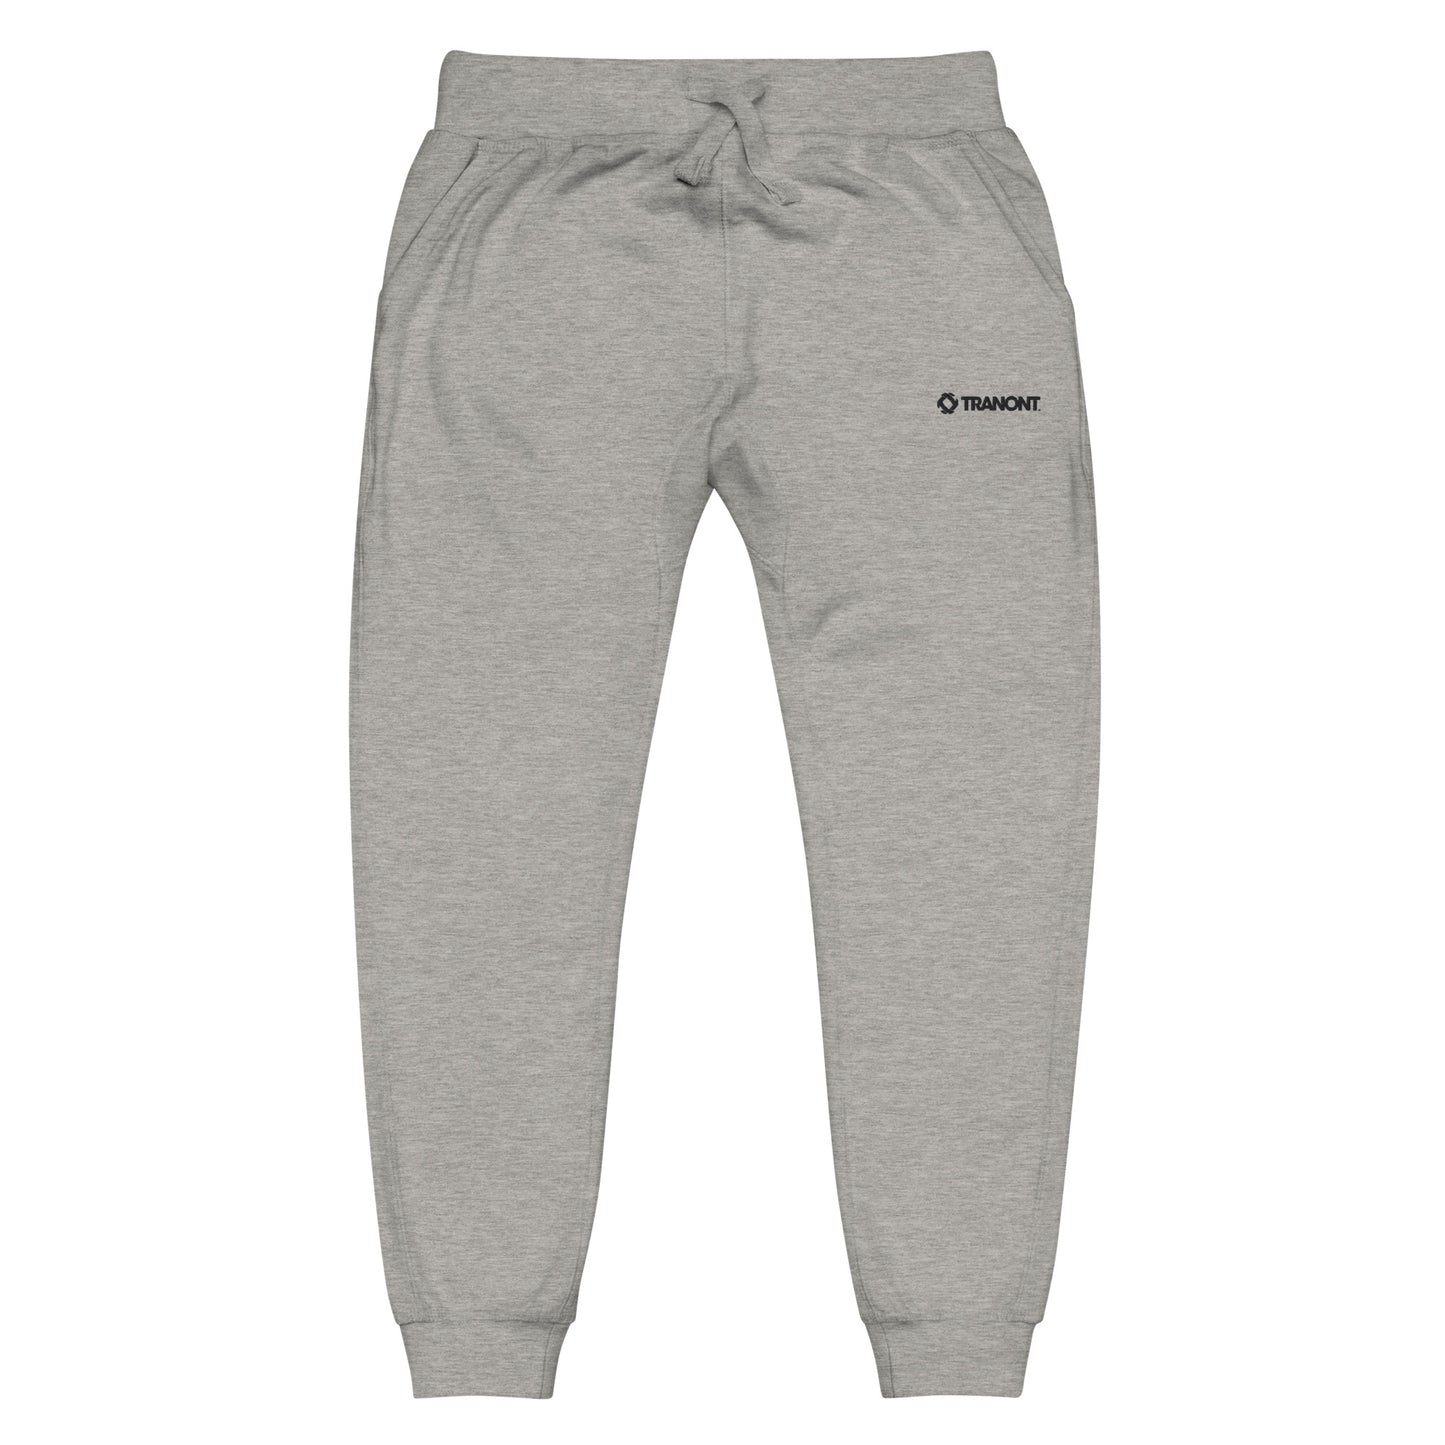 Tranont - Unisex fleece sweatpants - Embroidered logo – Tranont Swag Store